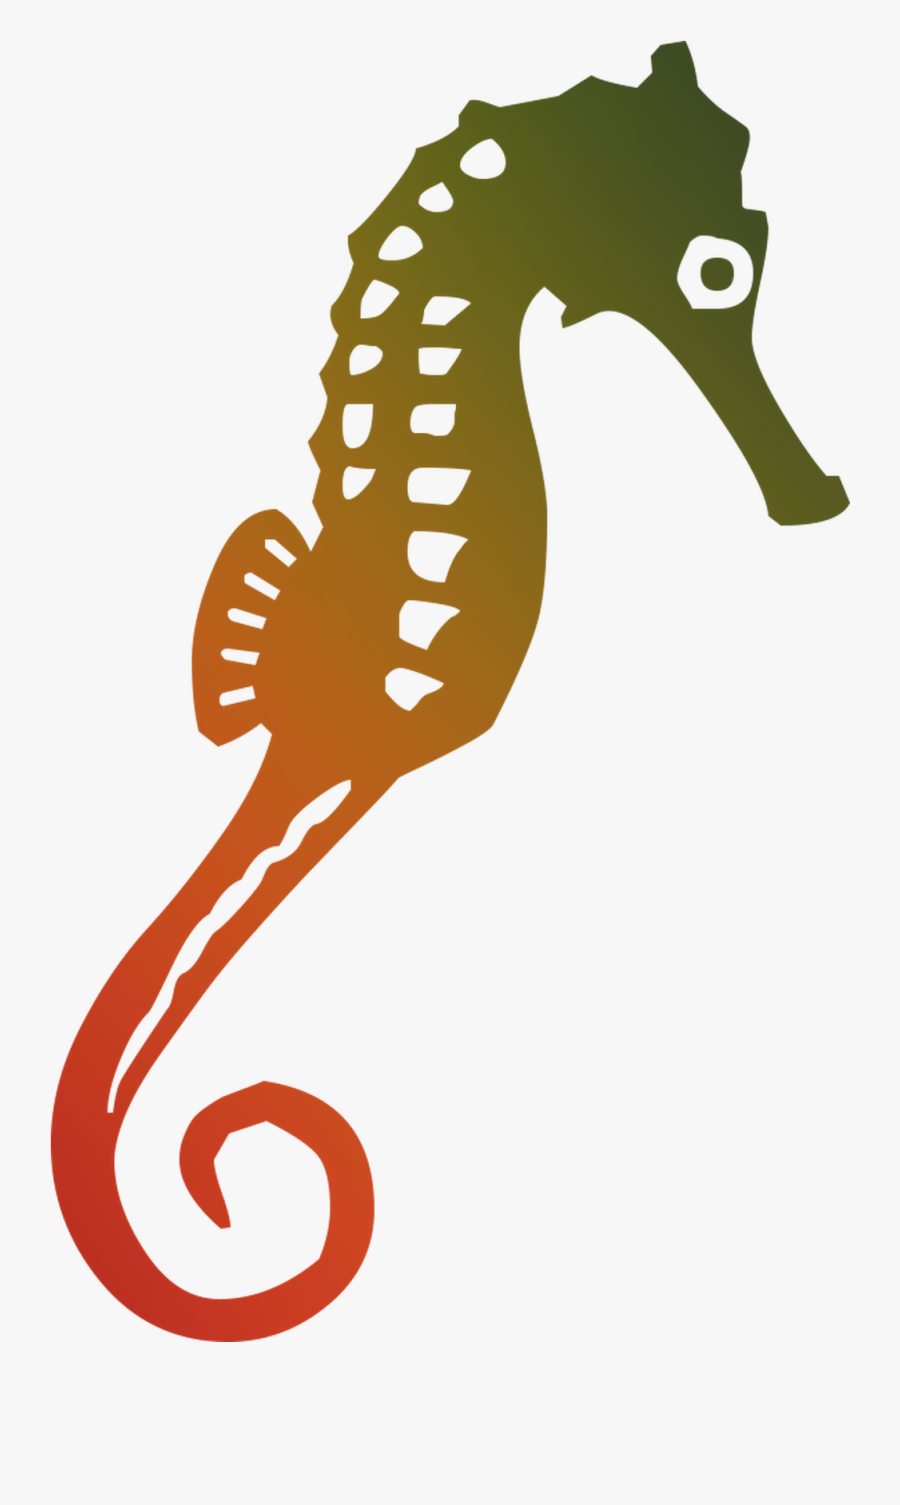 Seahorse Clip Art Graphics Image Illustration - Seahorse Graphic, Transparent Clipart